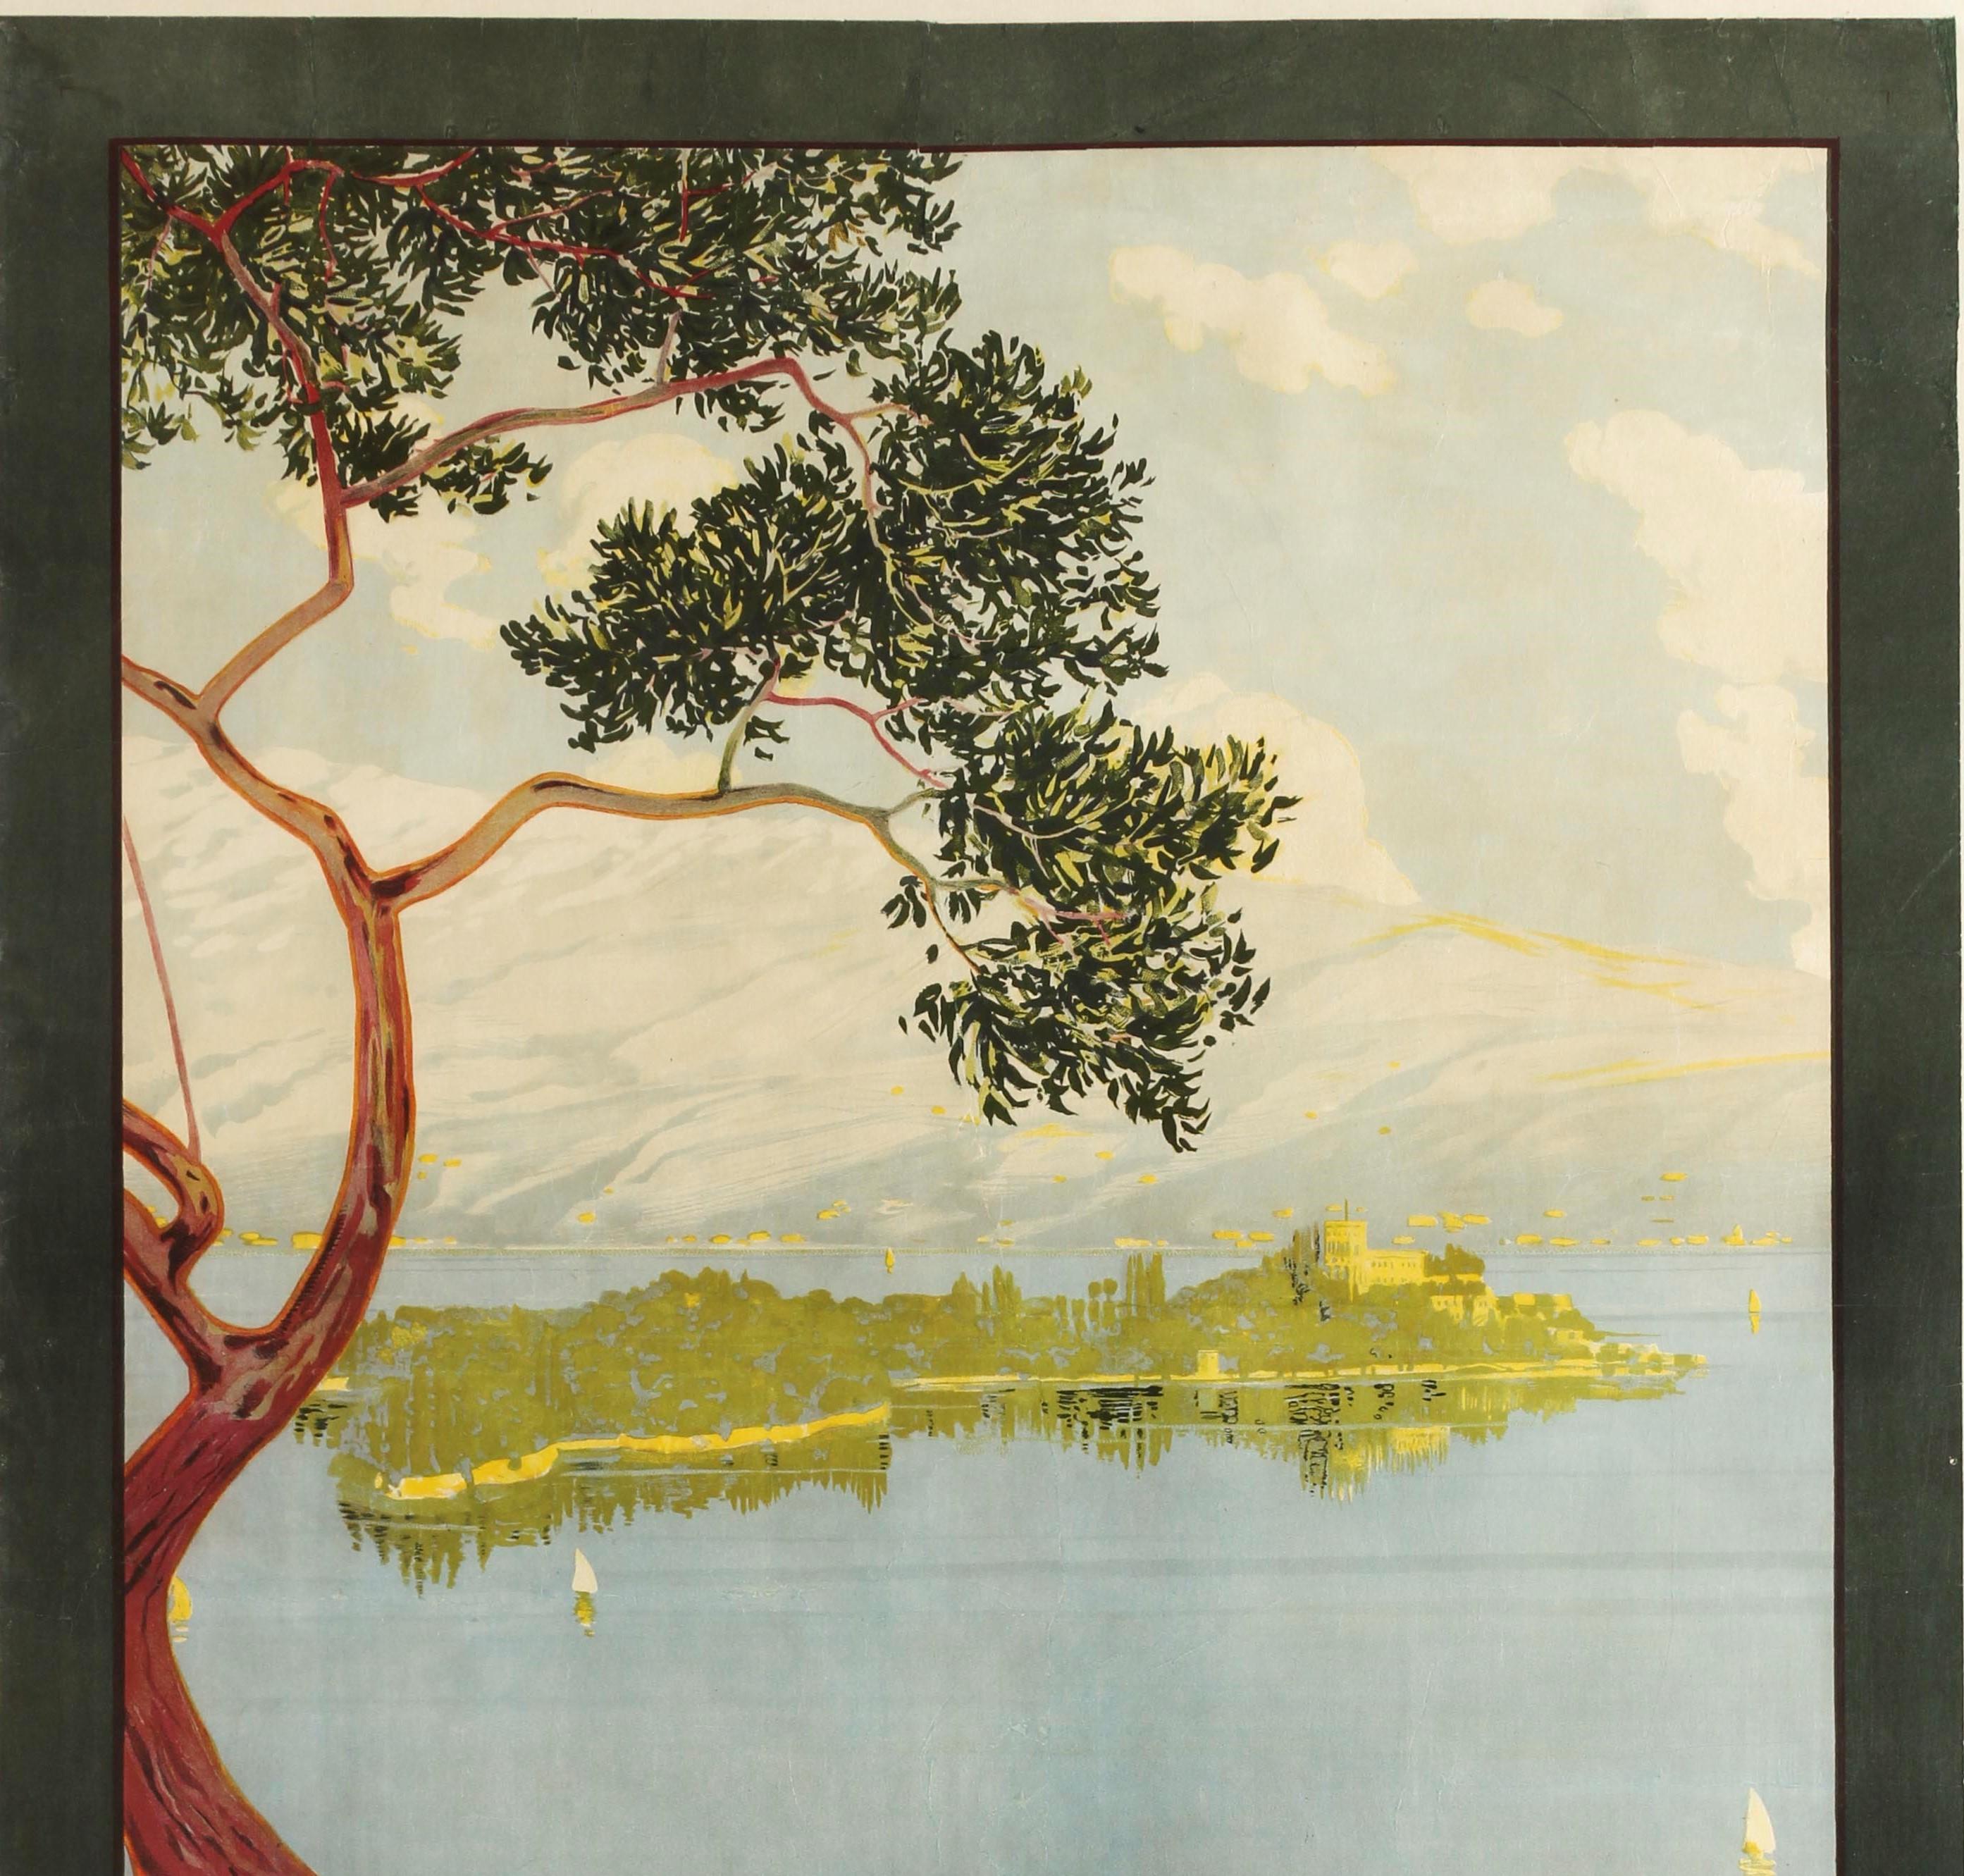 Original Vintage Poster For Le Lac De Garda ENIT Travel Sailing Italy Lake Garda - Print by Severino Tremator